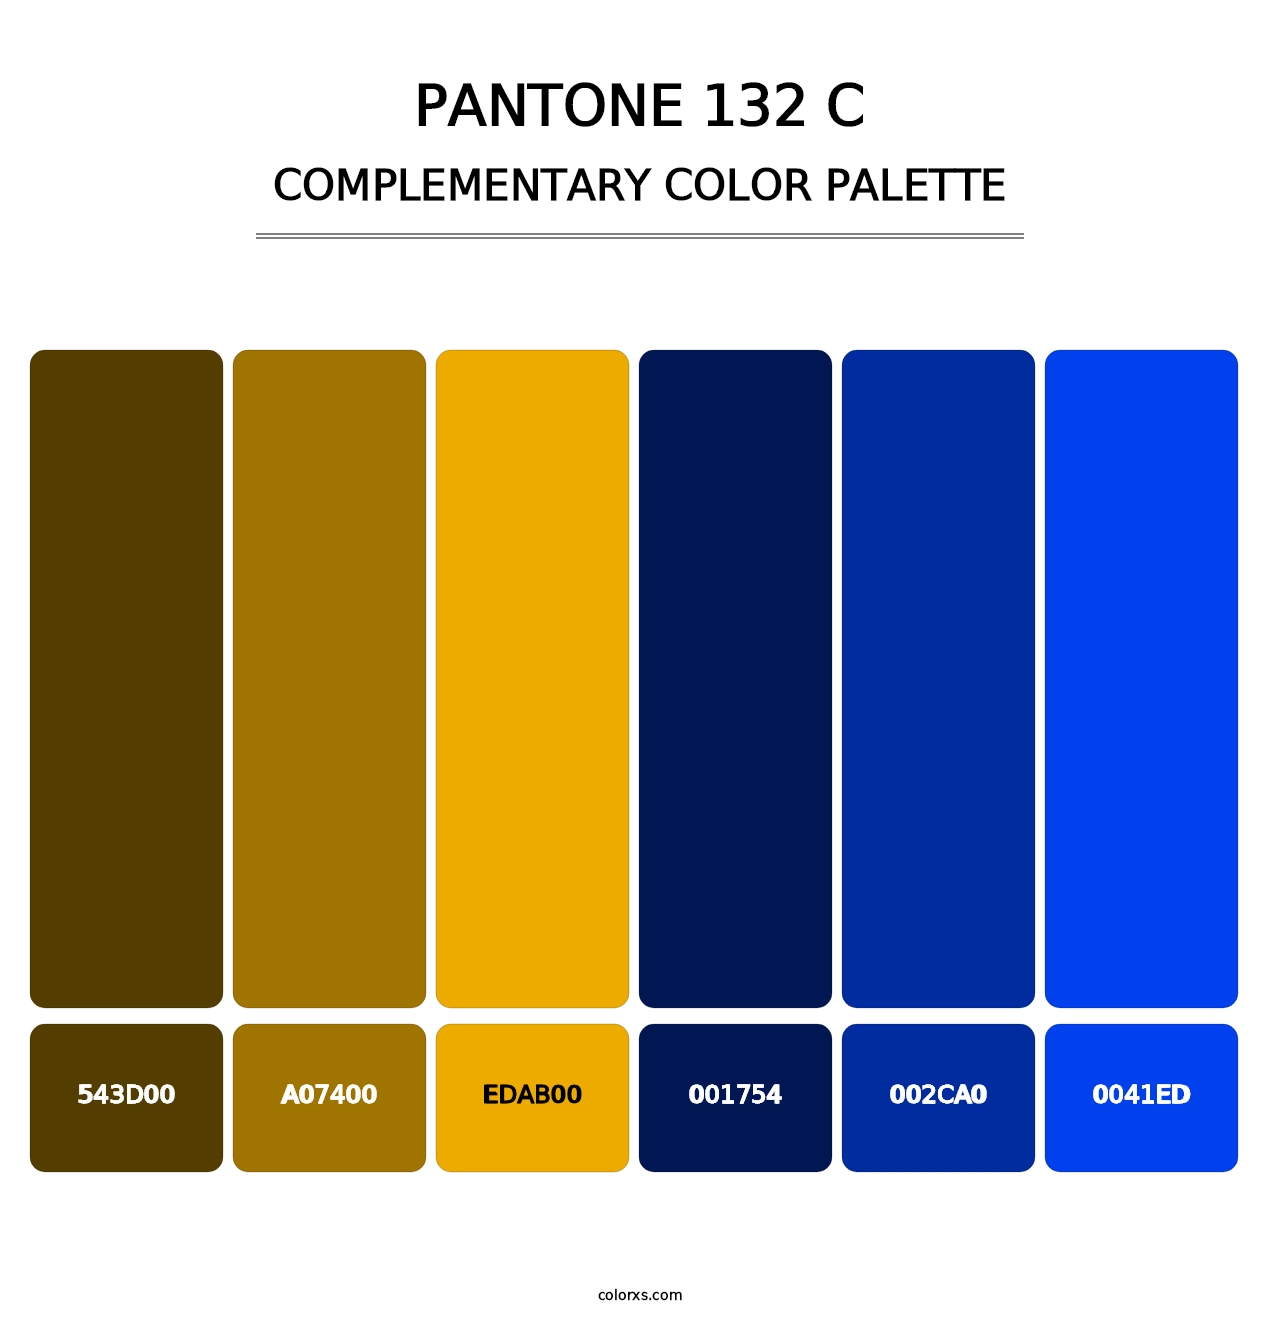 PANTONE 132 C - Complementary Color Palette